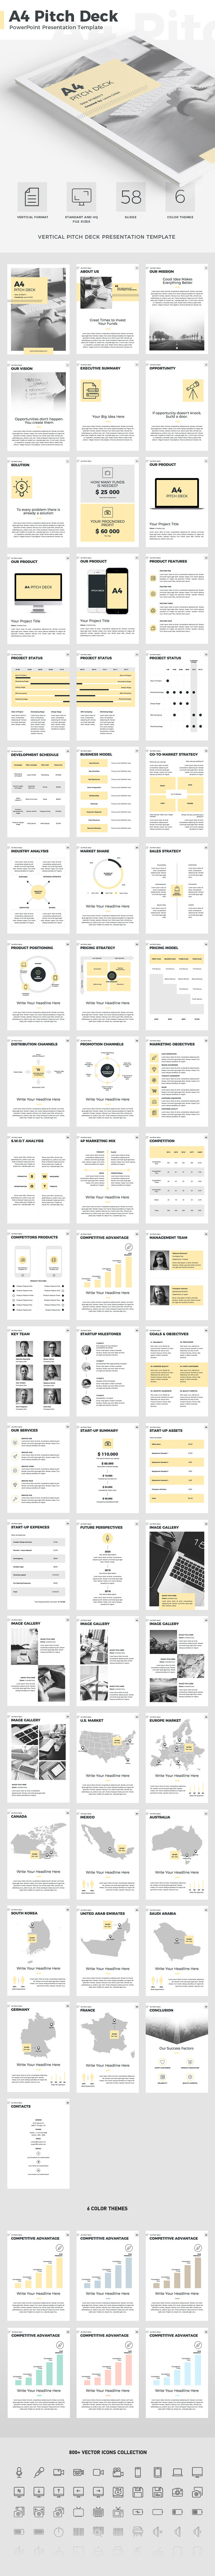 pitch deck business marketing   Plan report presentation Powerpoint template a4